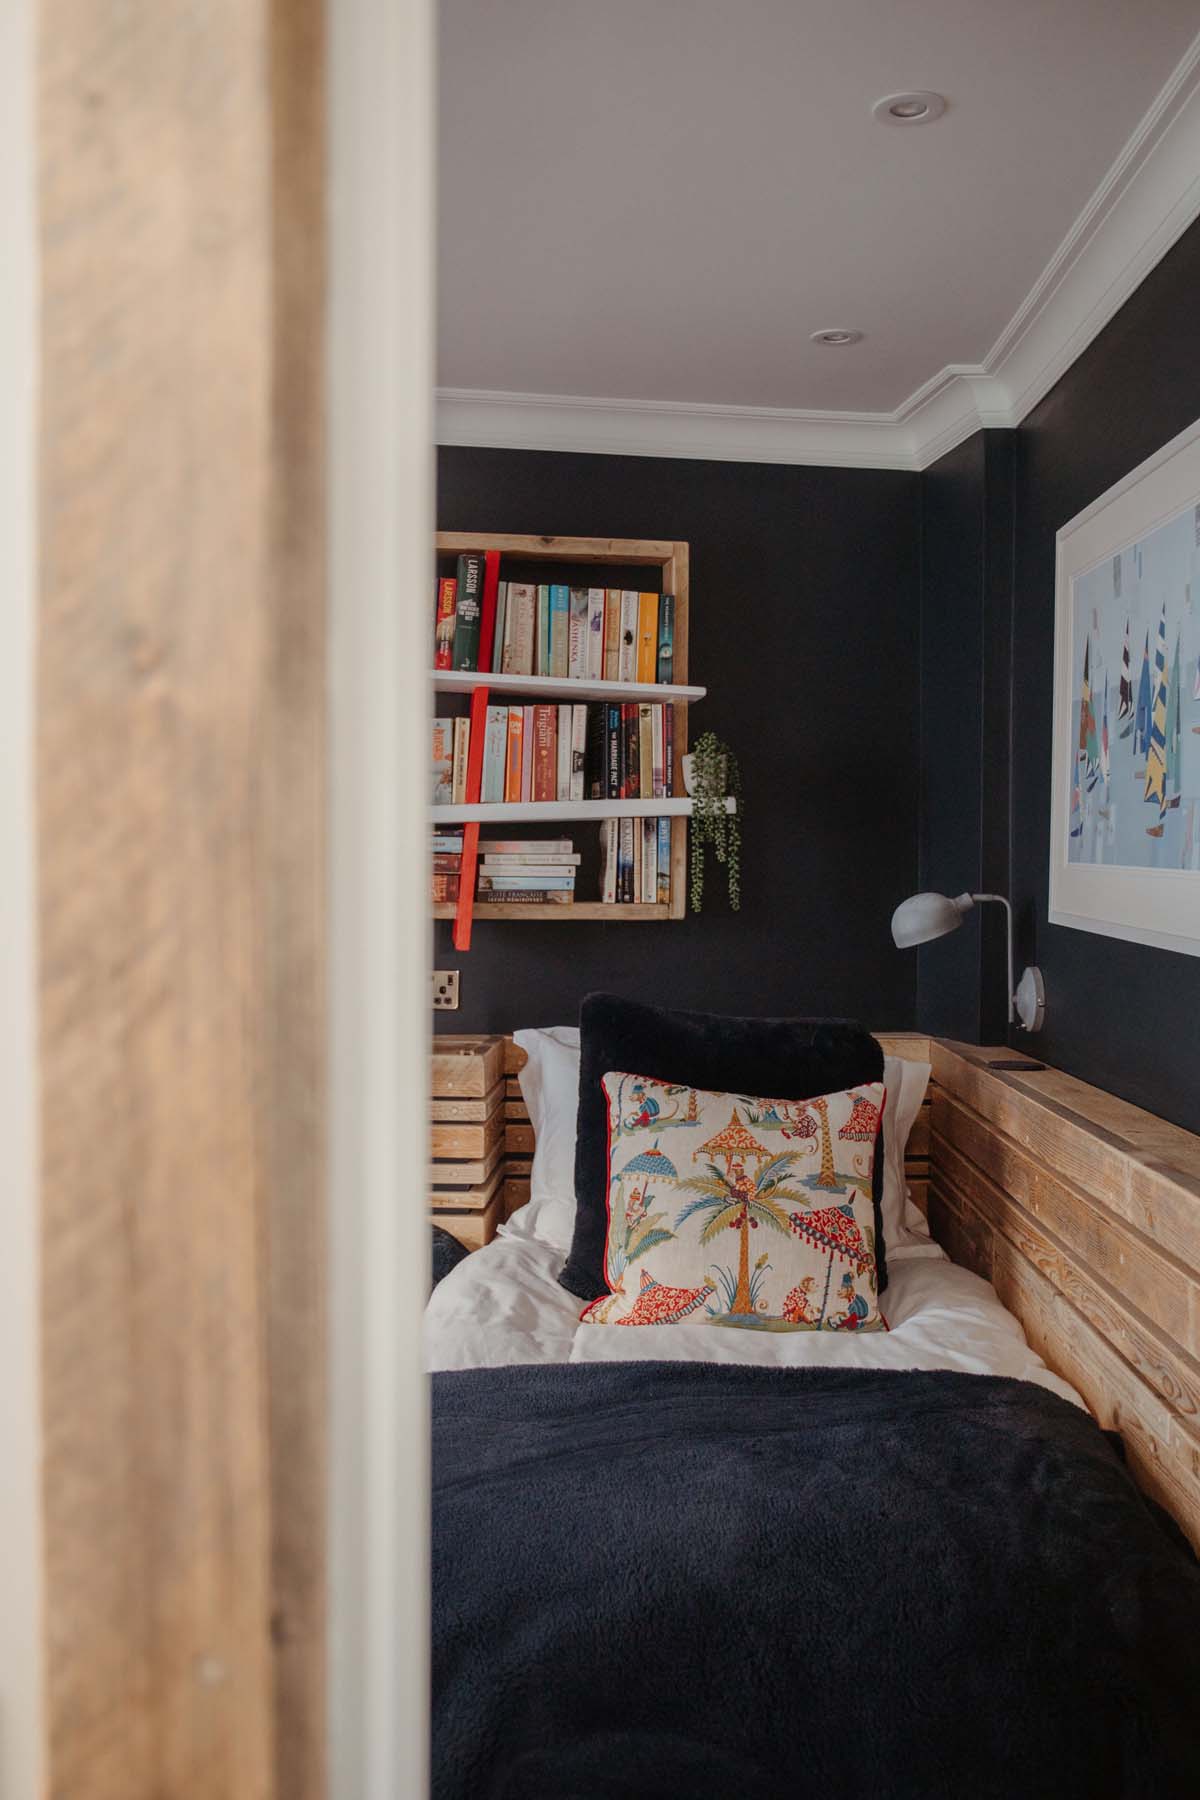 Kids bedroom wooden bookshelf on the wall